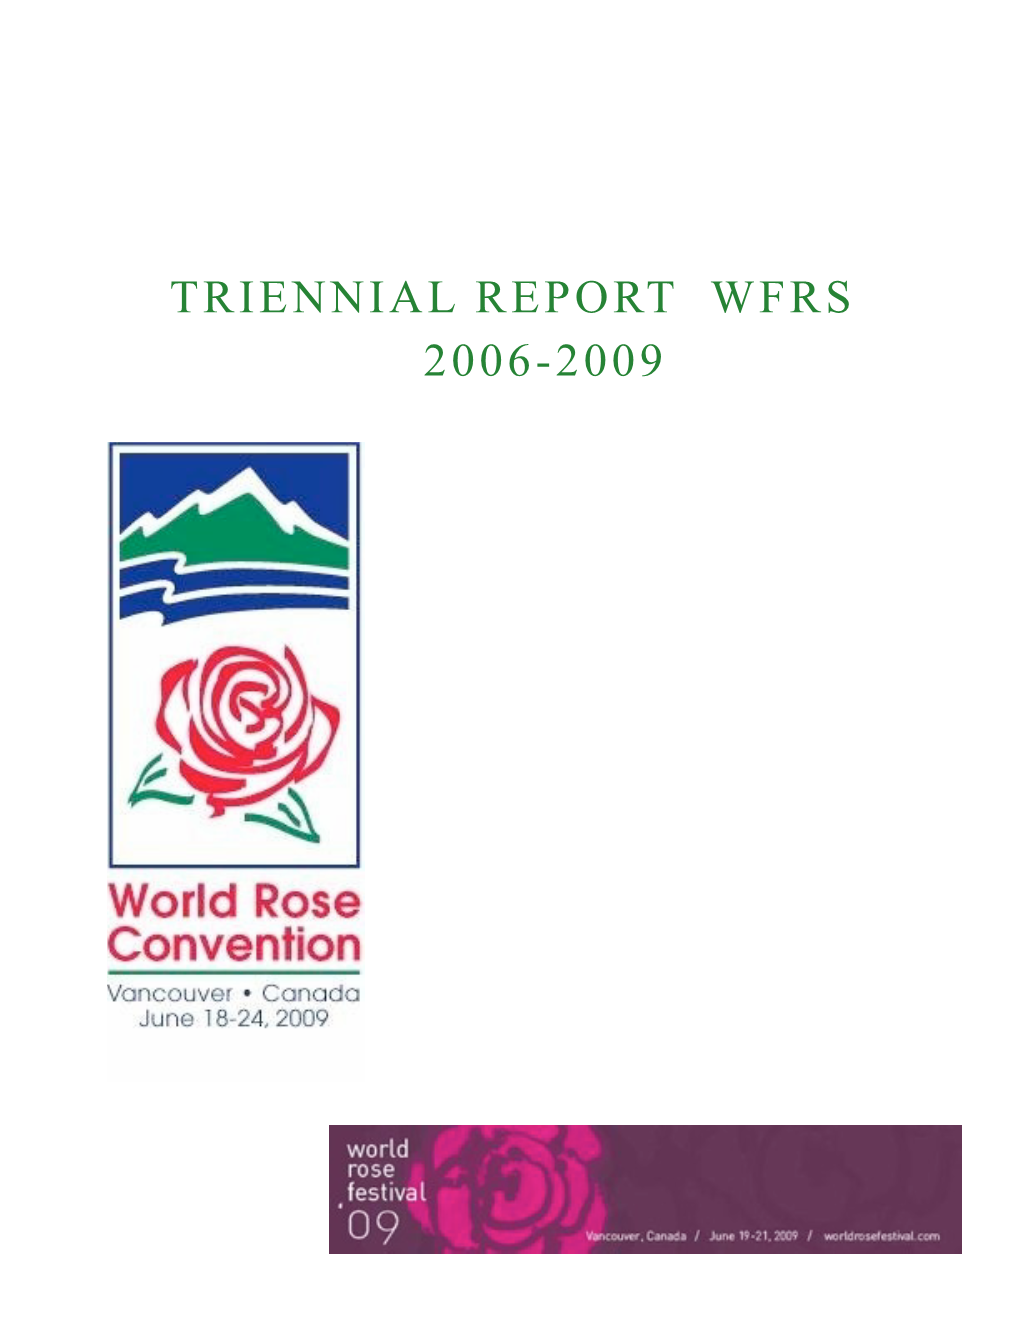 Wfrs Triennial Report 2006-2009